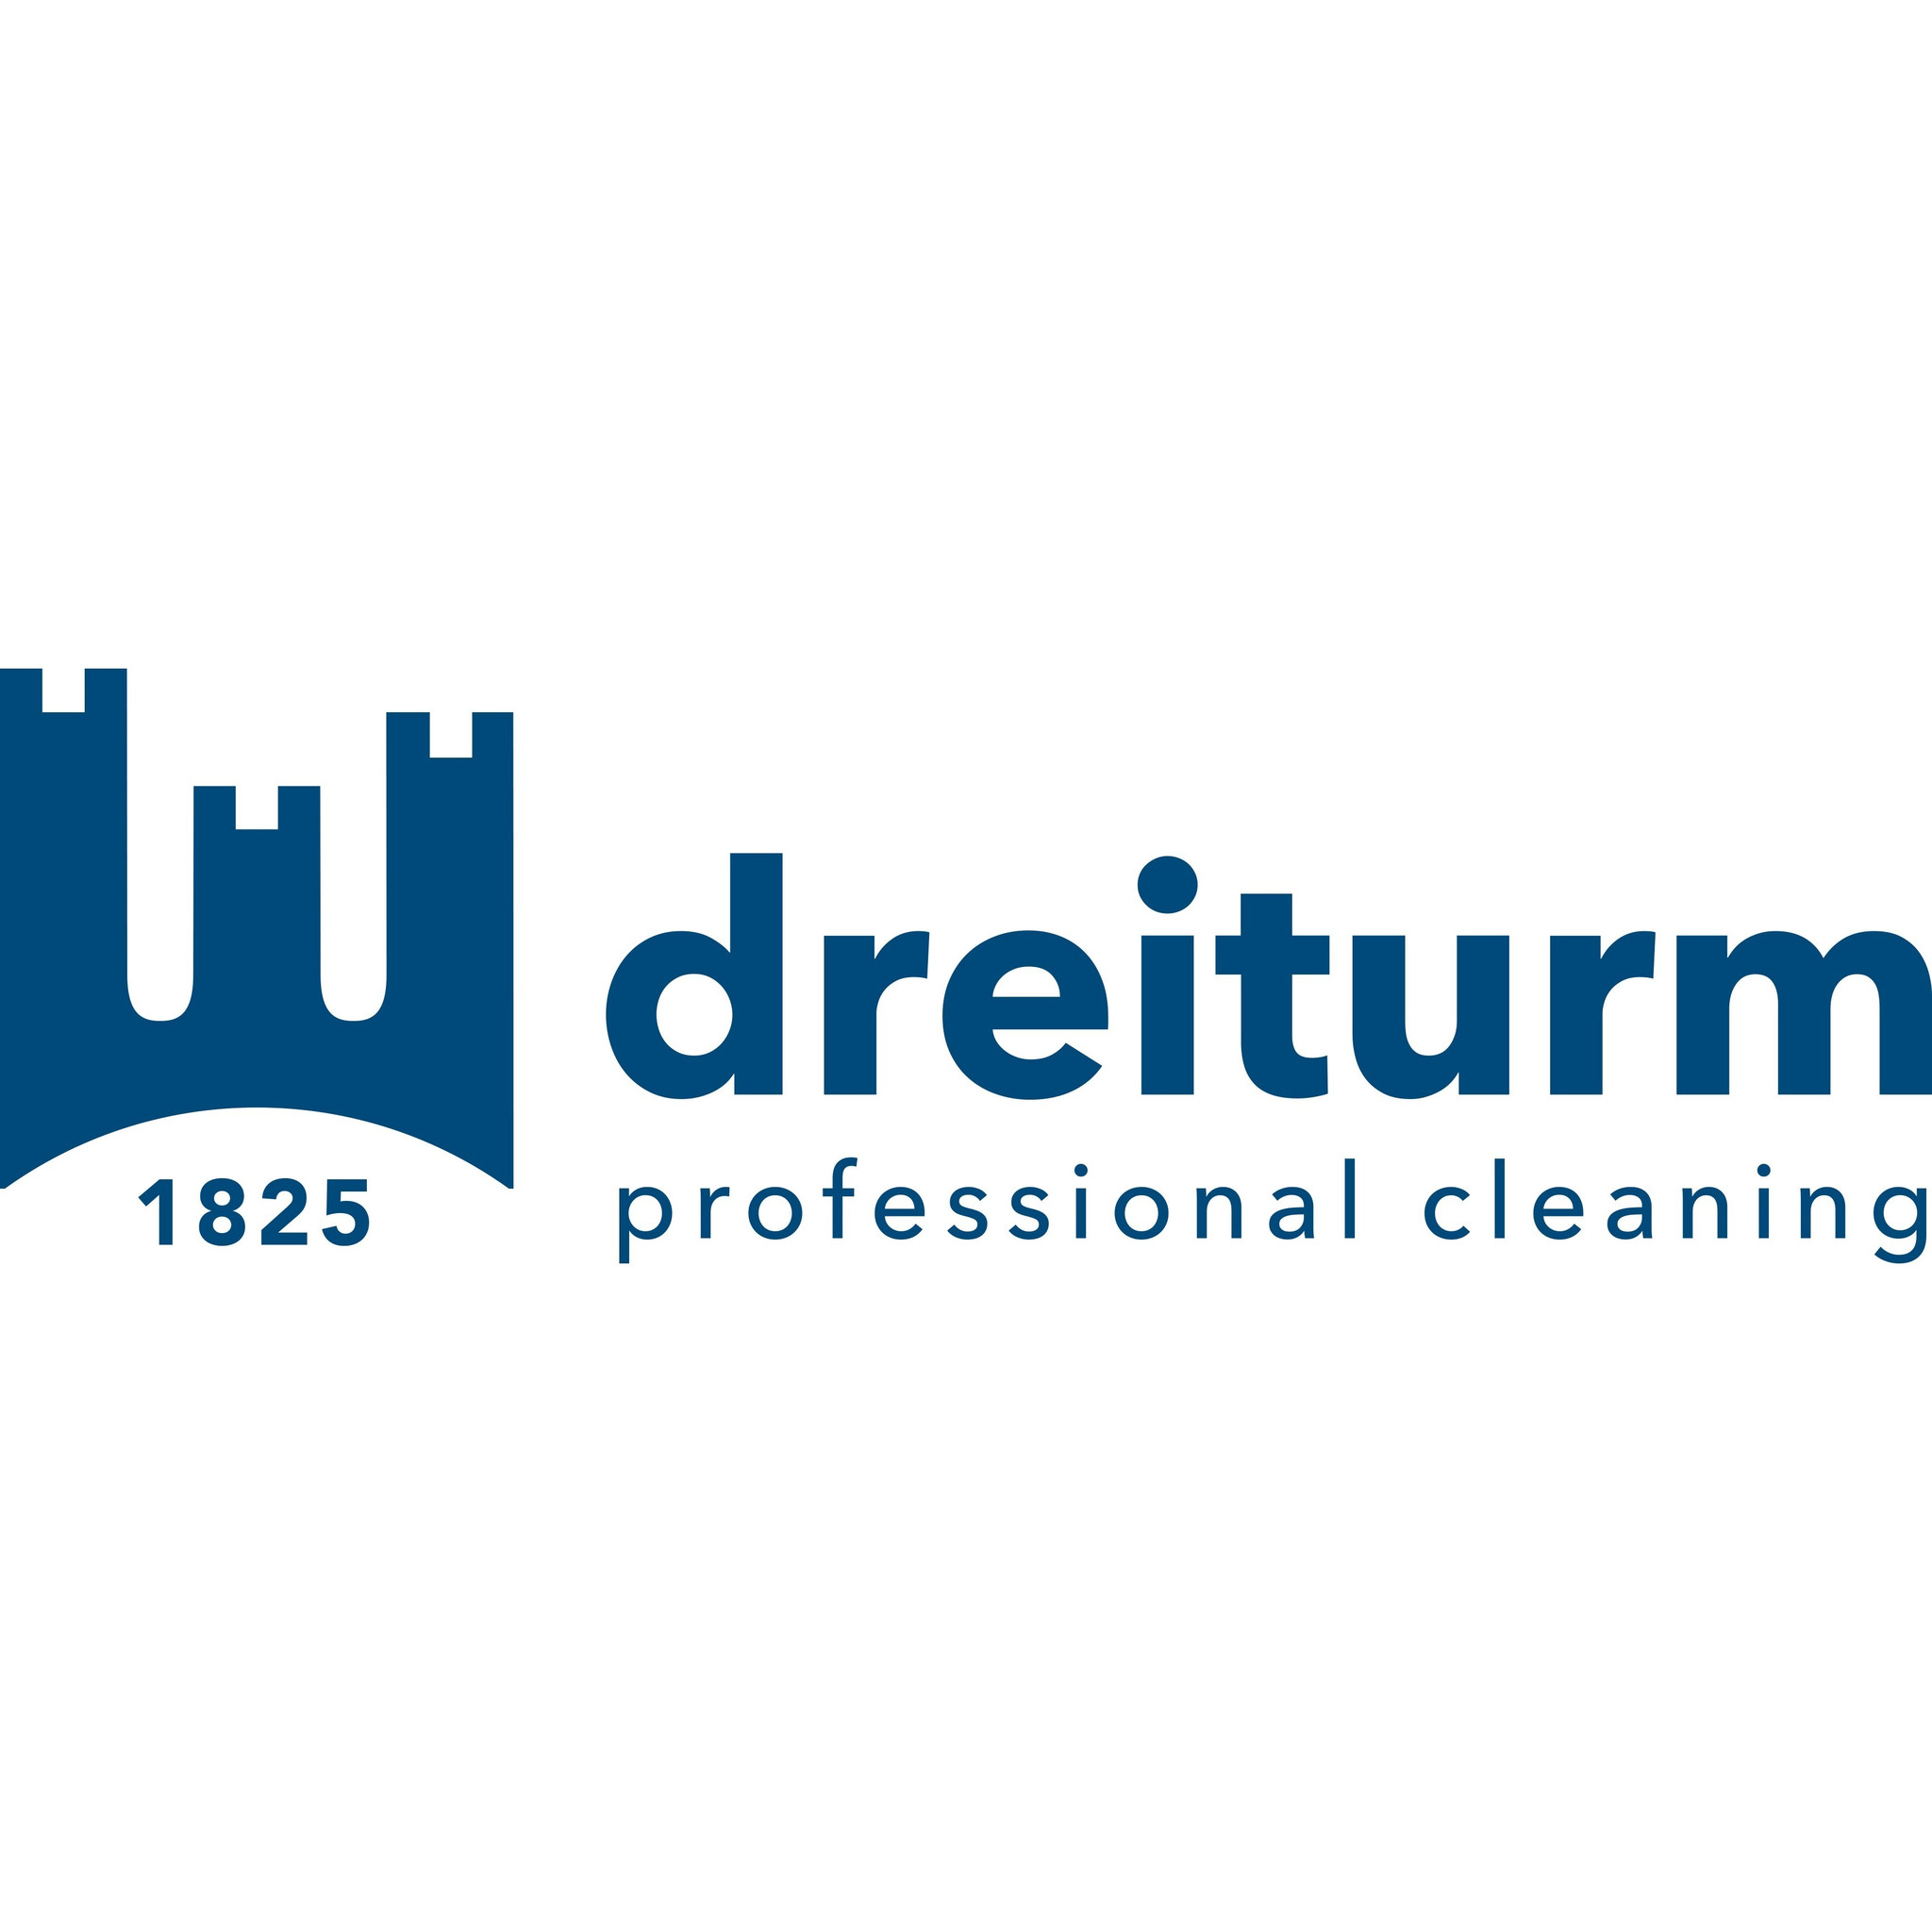 DREITURM GmbH